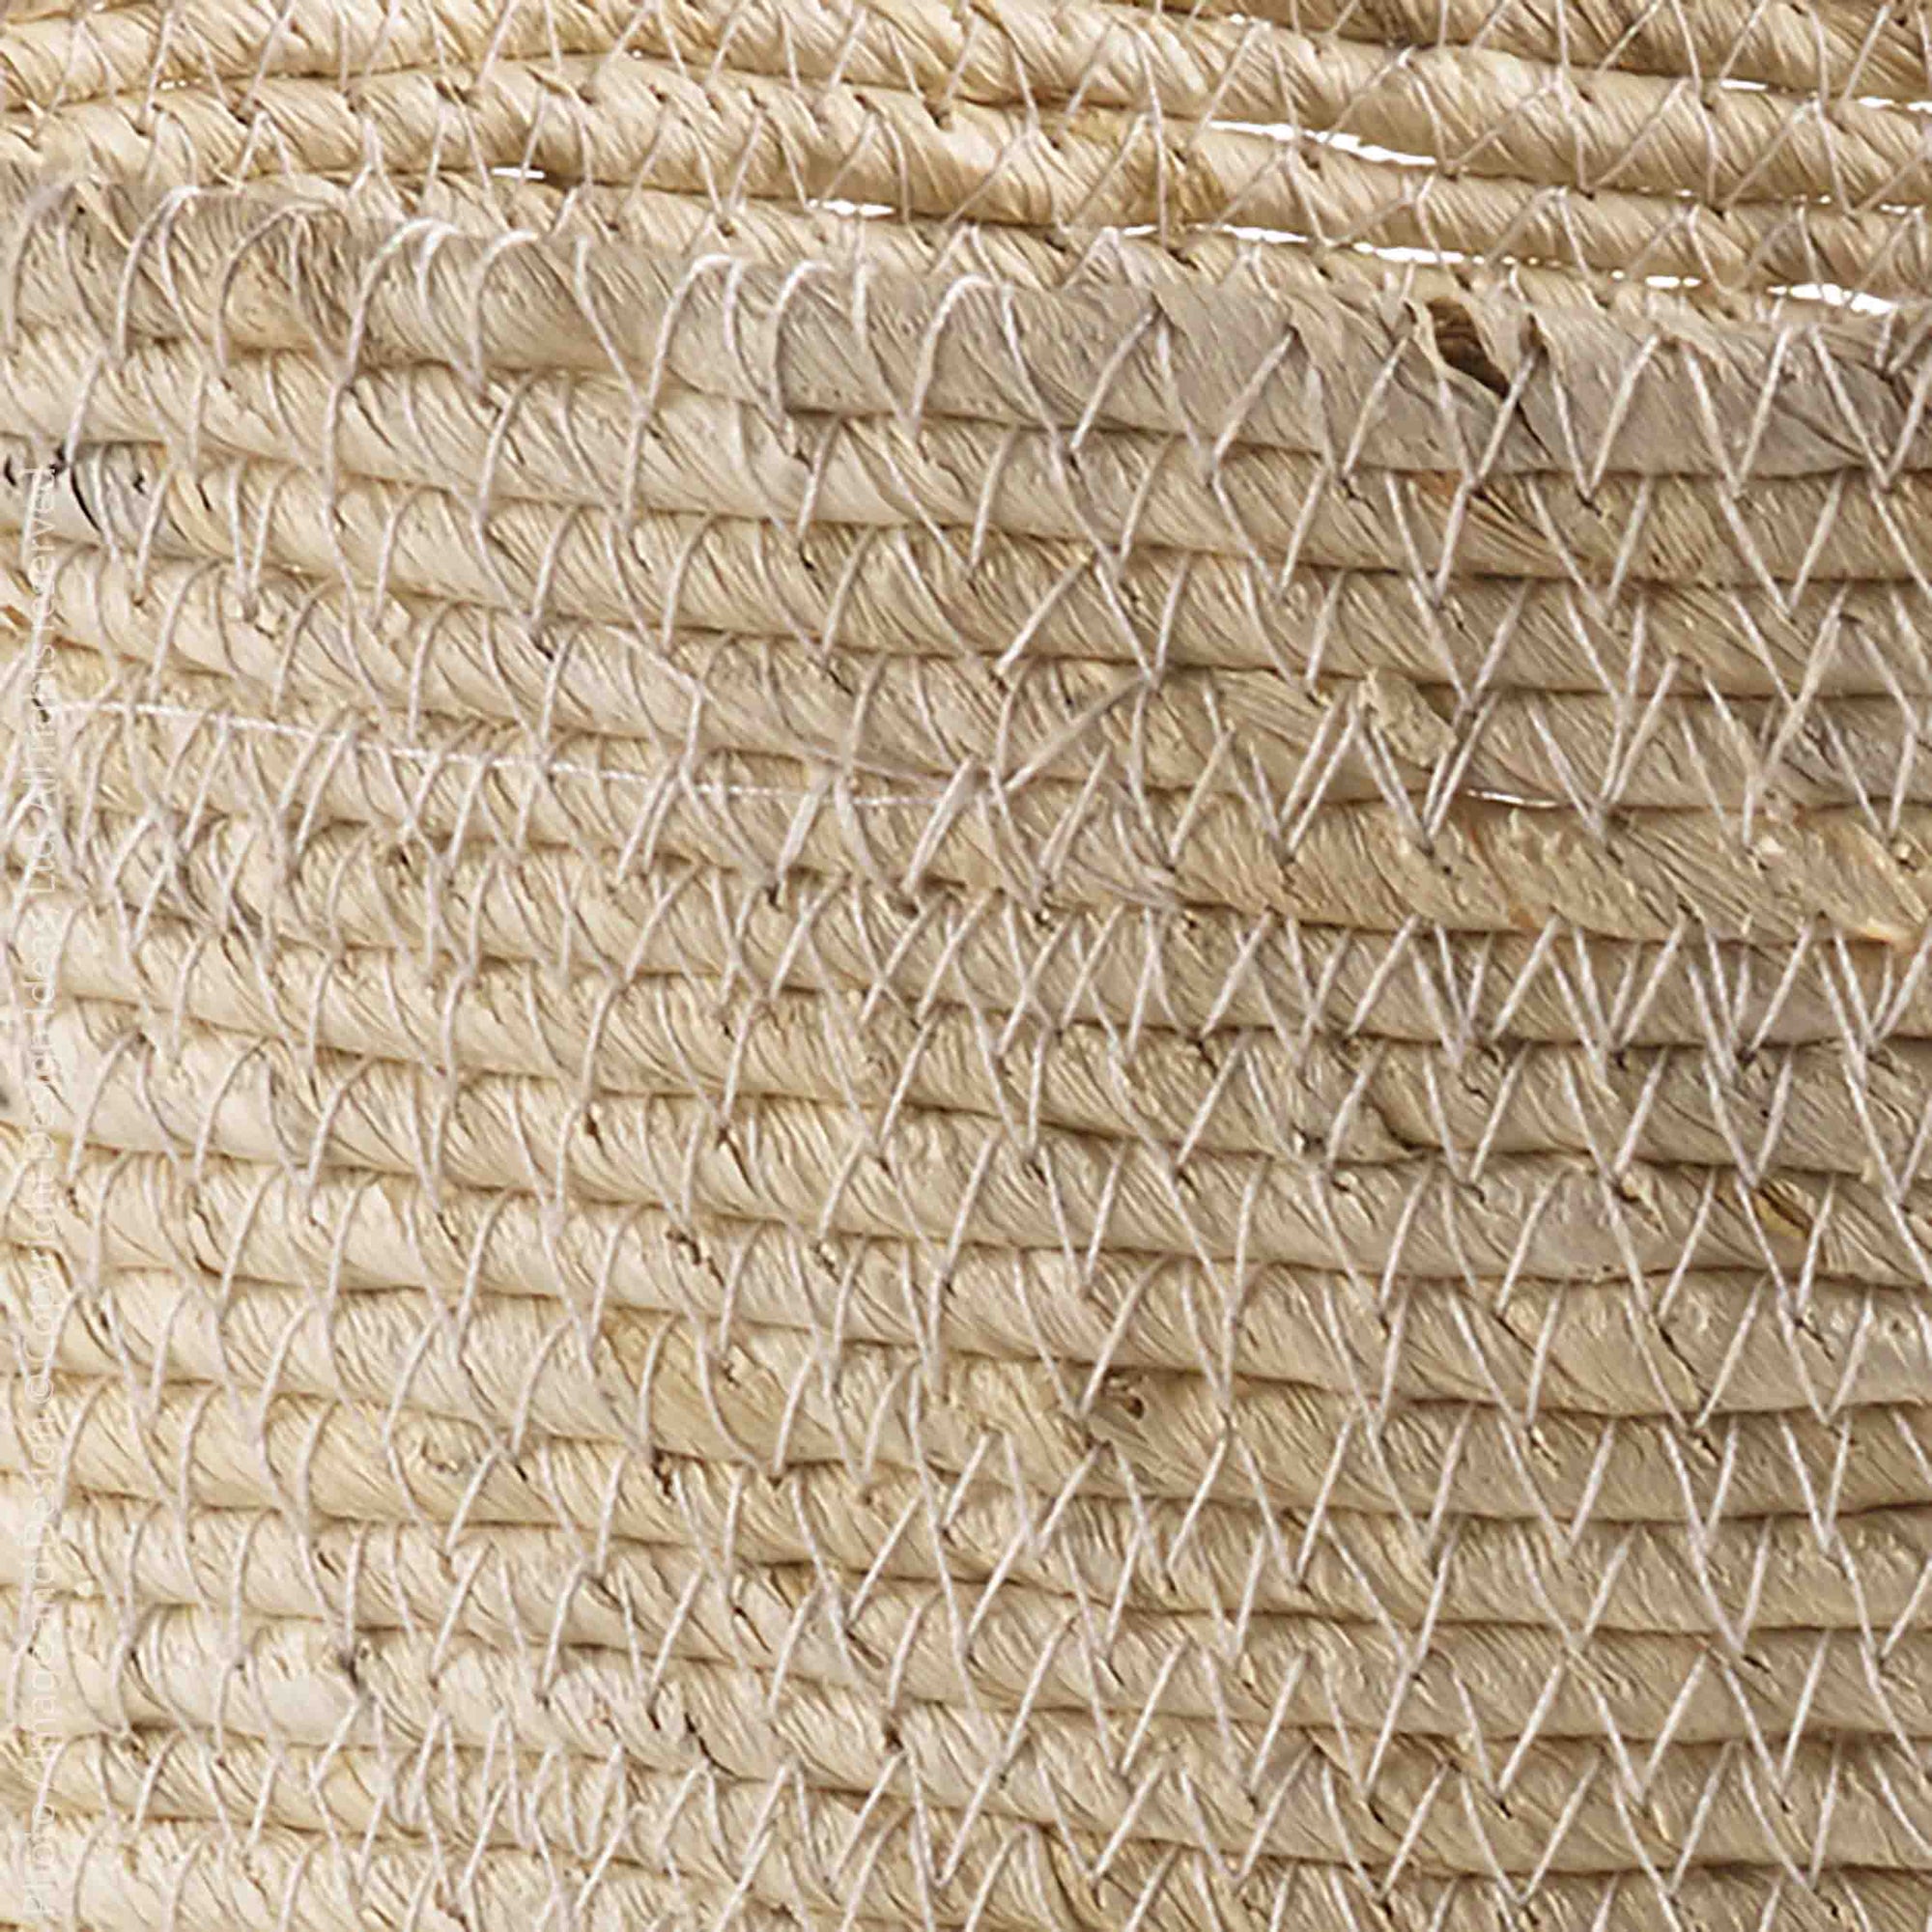 Maiz™ Medium Woven Corn Husk Basket with Handles